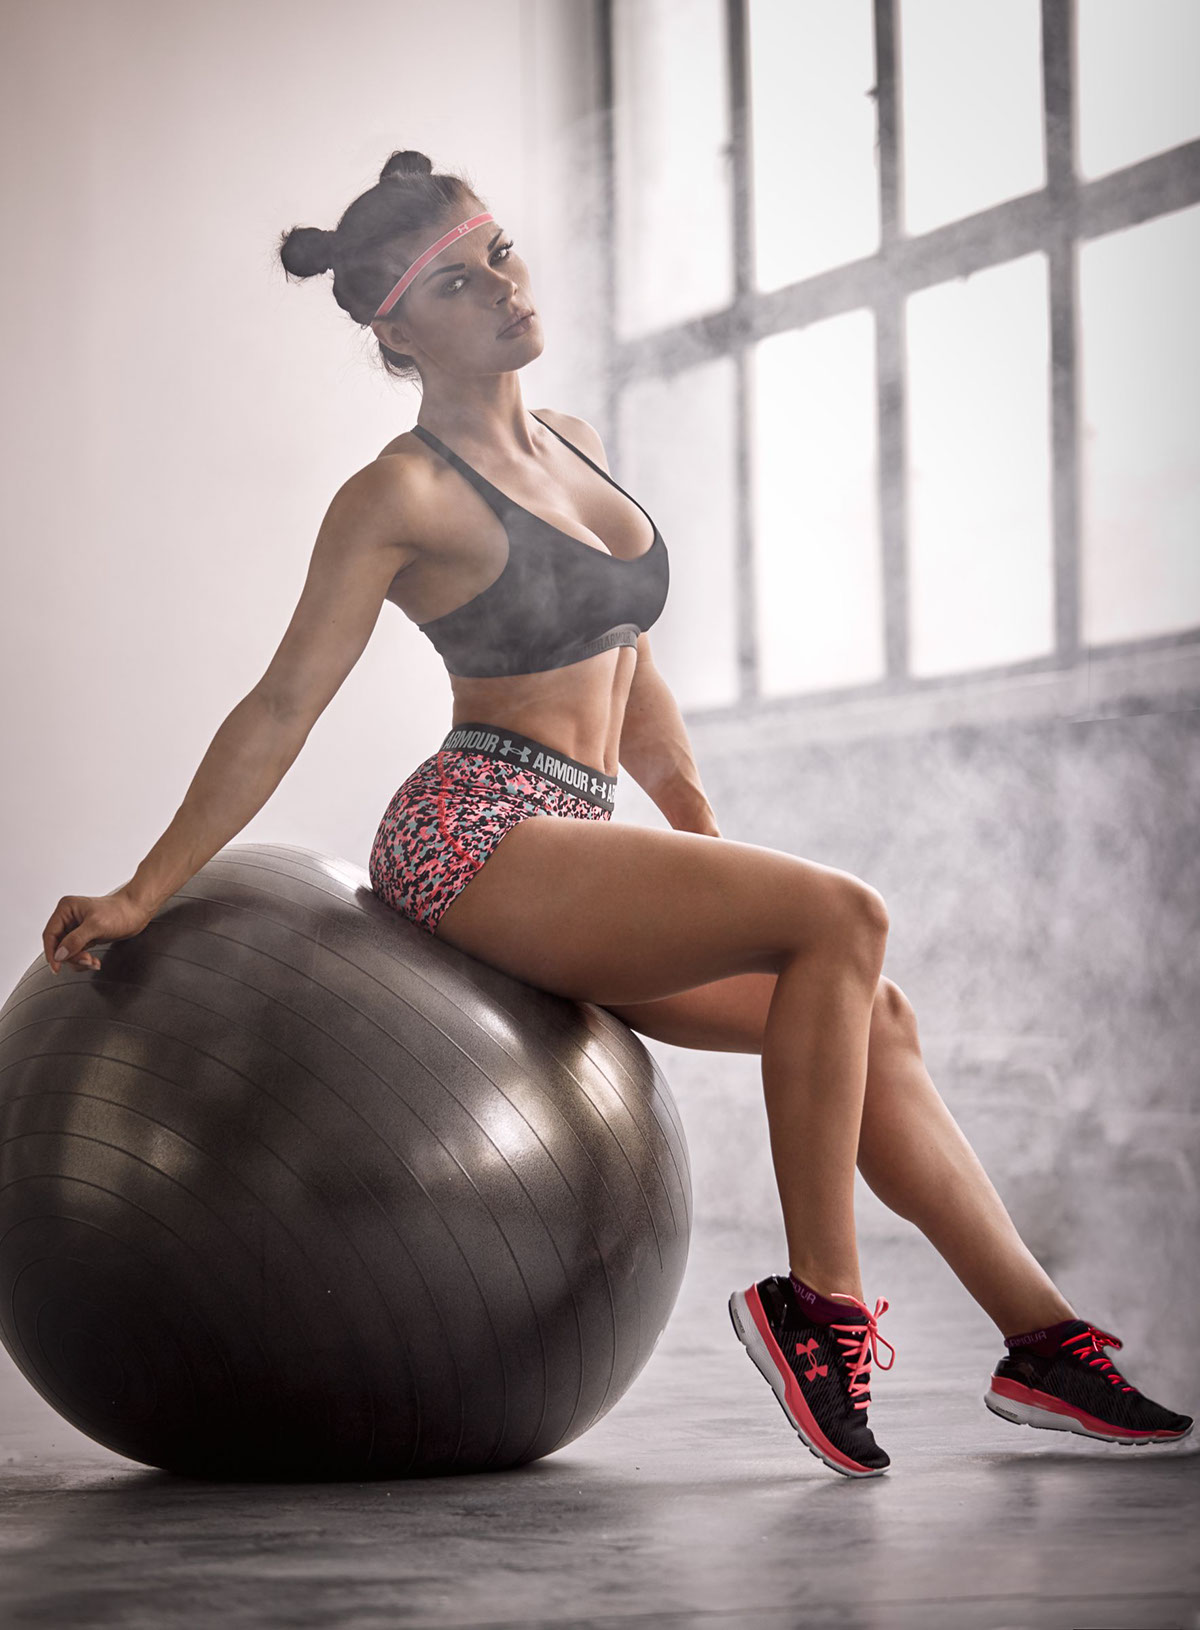 sport fitness FIT wear Active Sporty activewear Health healthy beauty woman polishgirl poland photoshoot photomodel